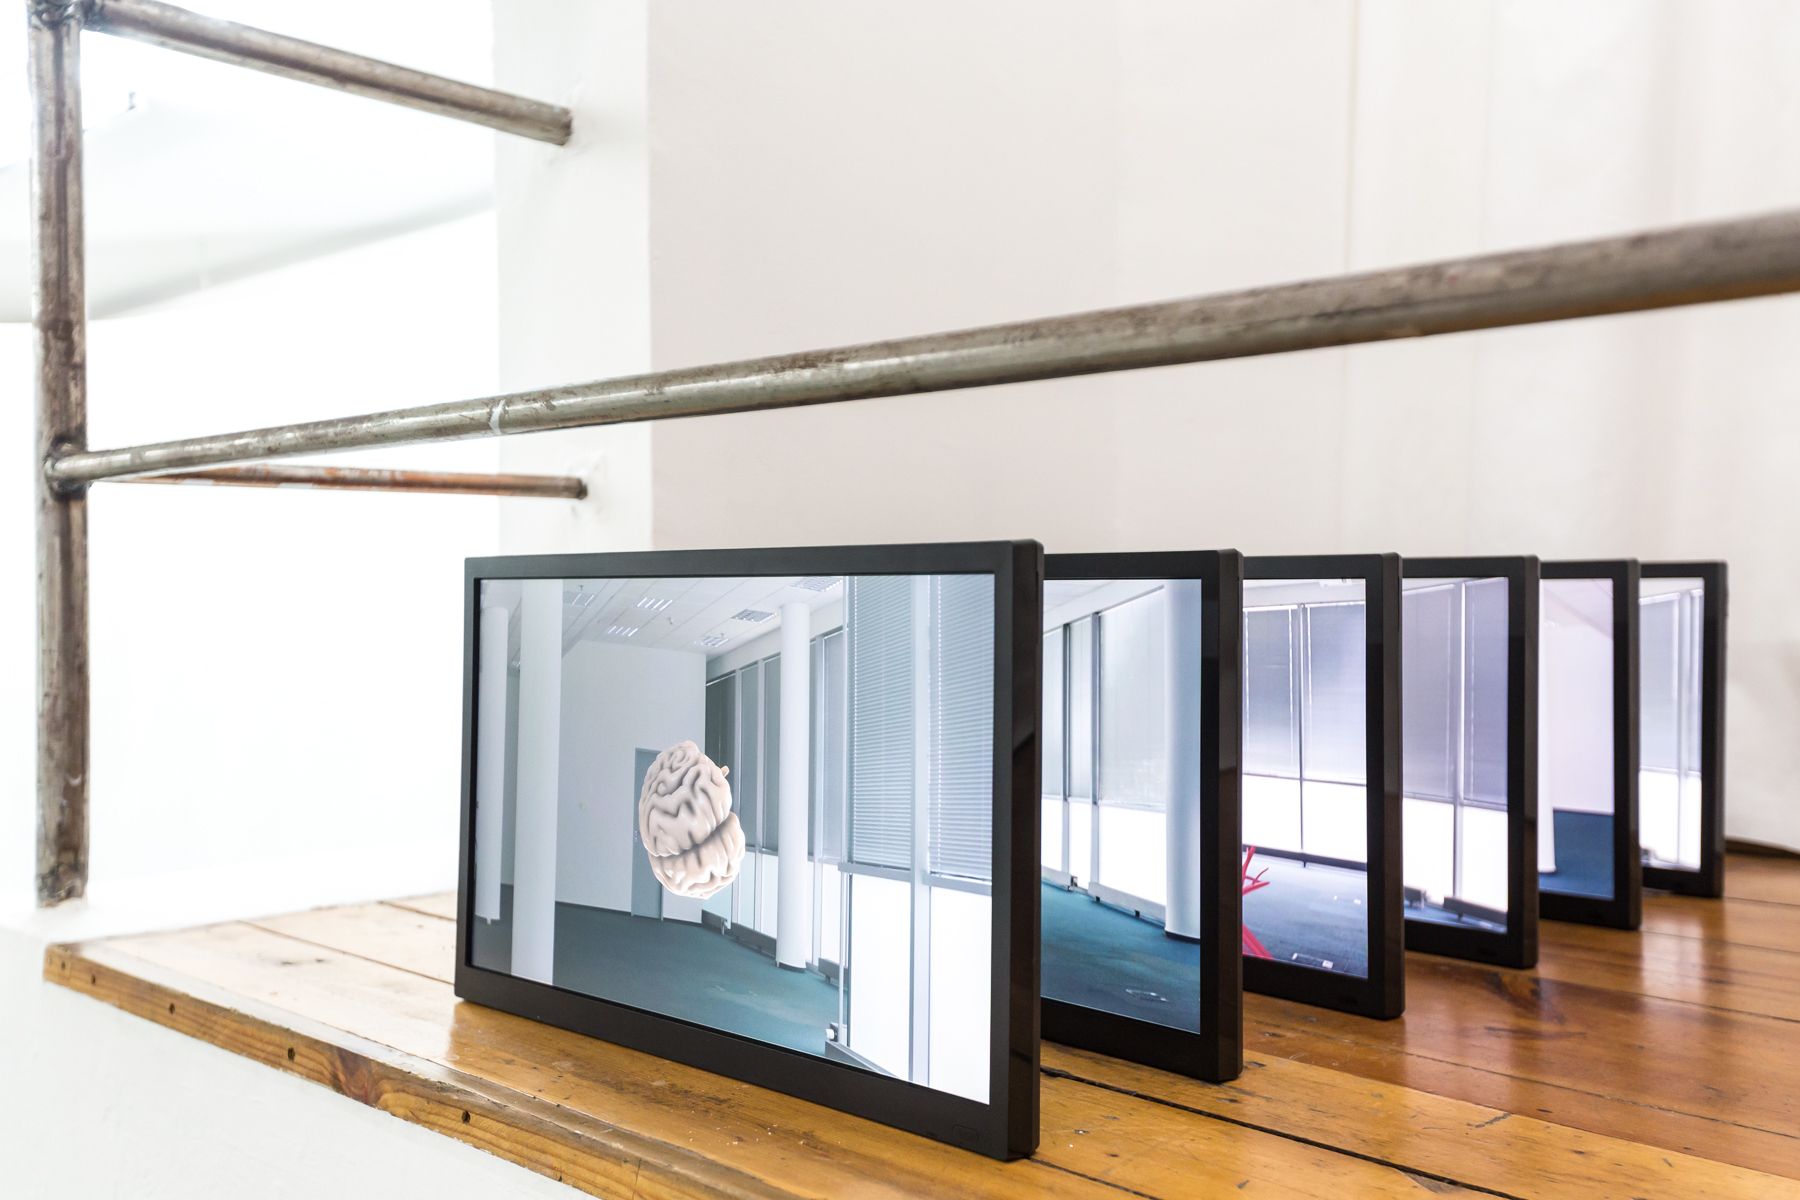 Barbora Kleinhamplová, 'Sometimes They Almost Feel Happy' (2015), Video, loop installation of 6 screens